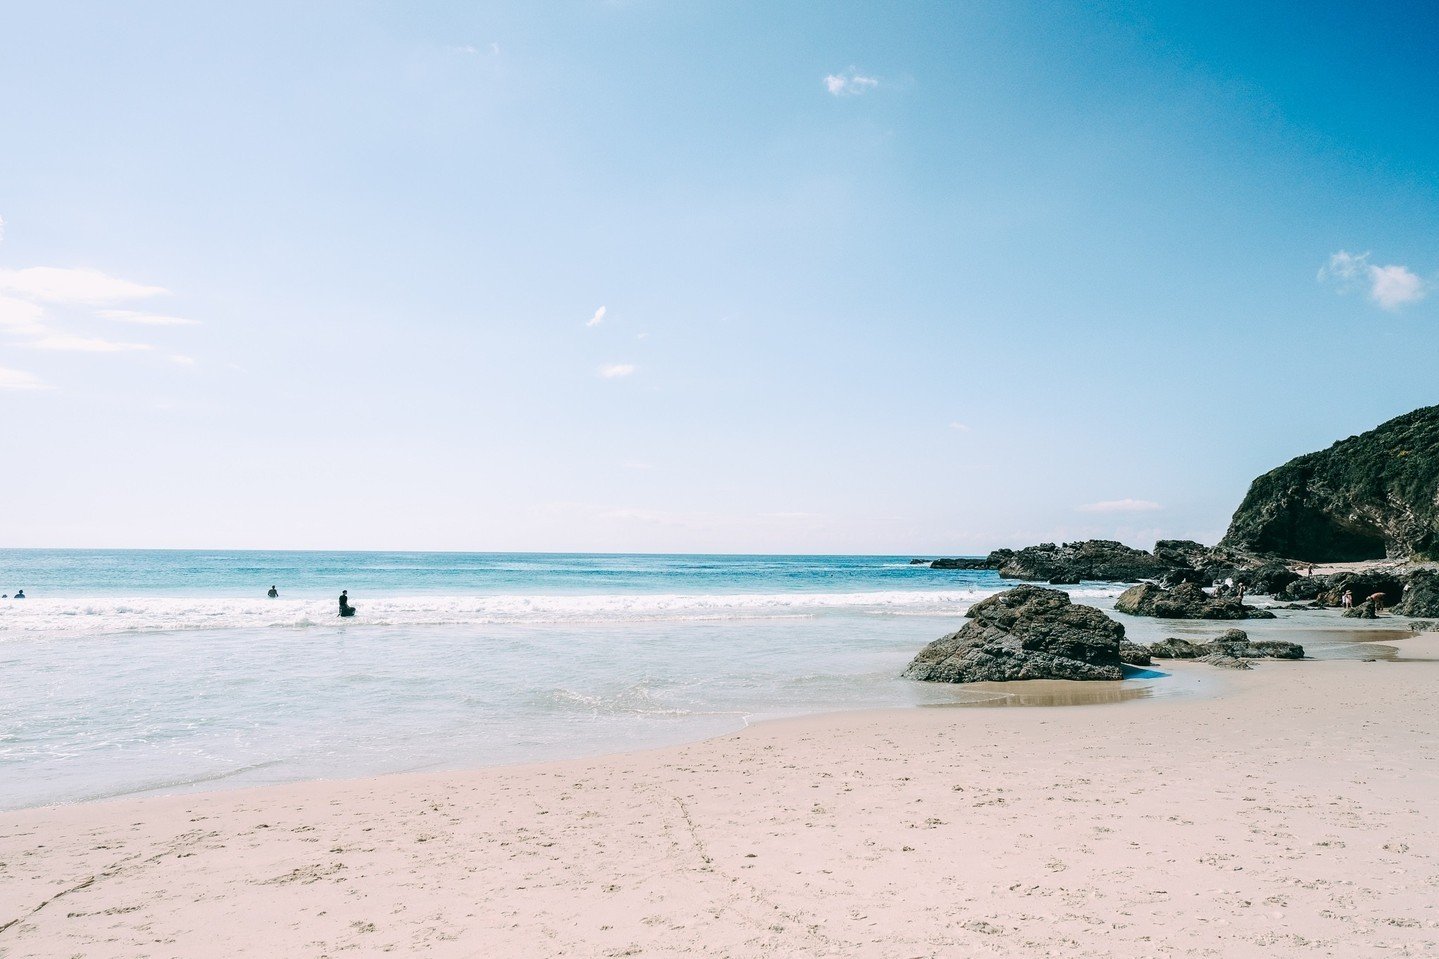 looking forward to the sunny days ahead.⁠
⁠
#forcleanoceans #pipinghotaustralia #beachdaydreams